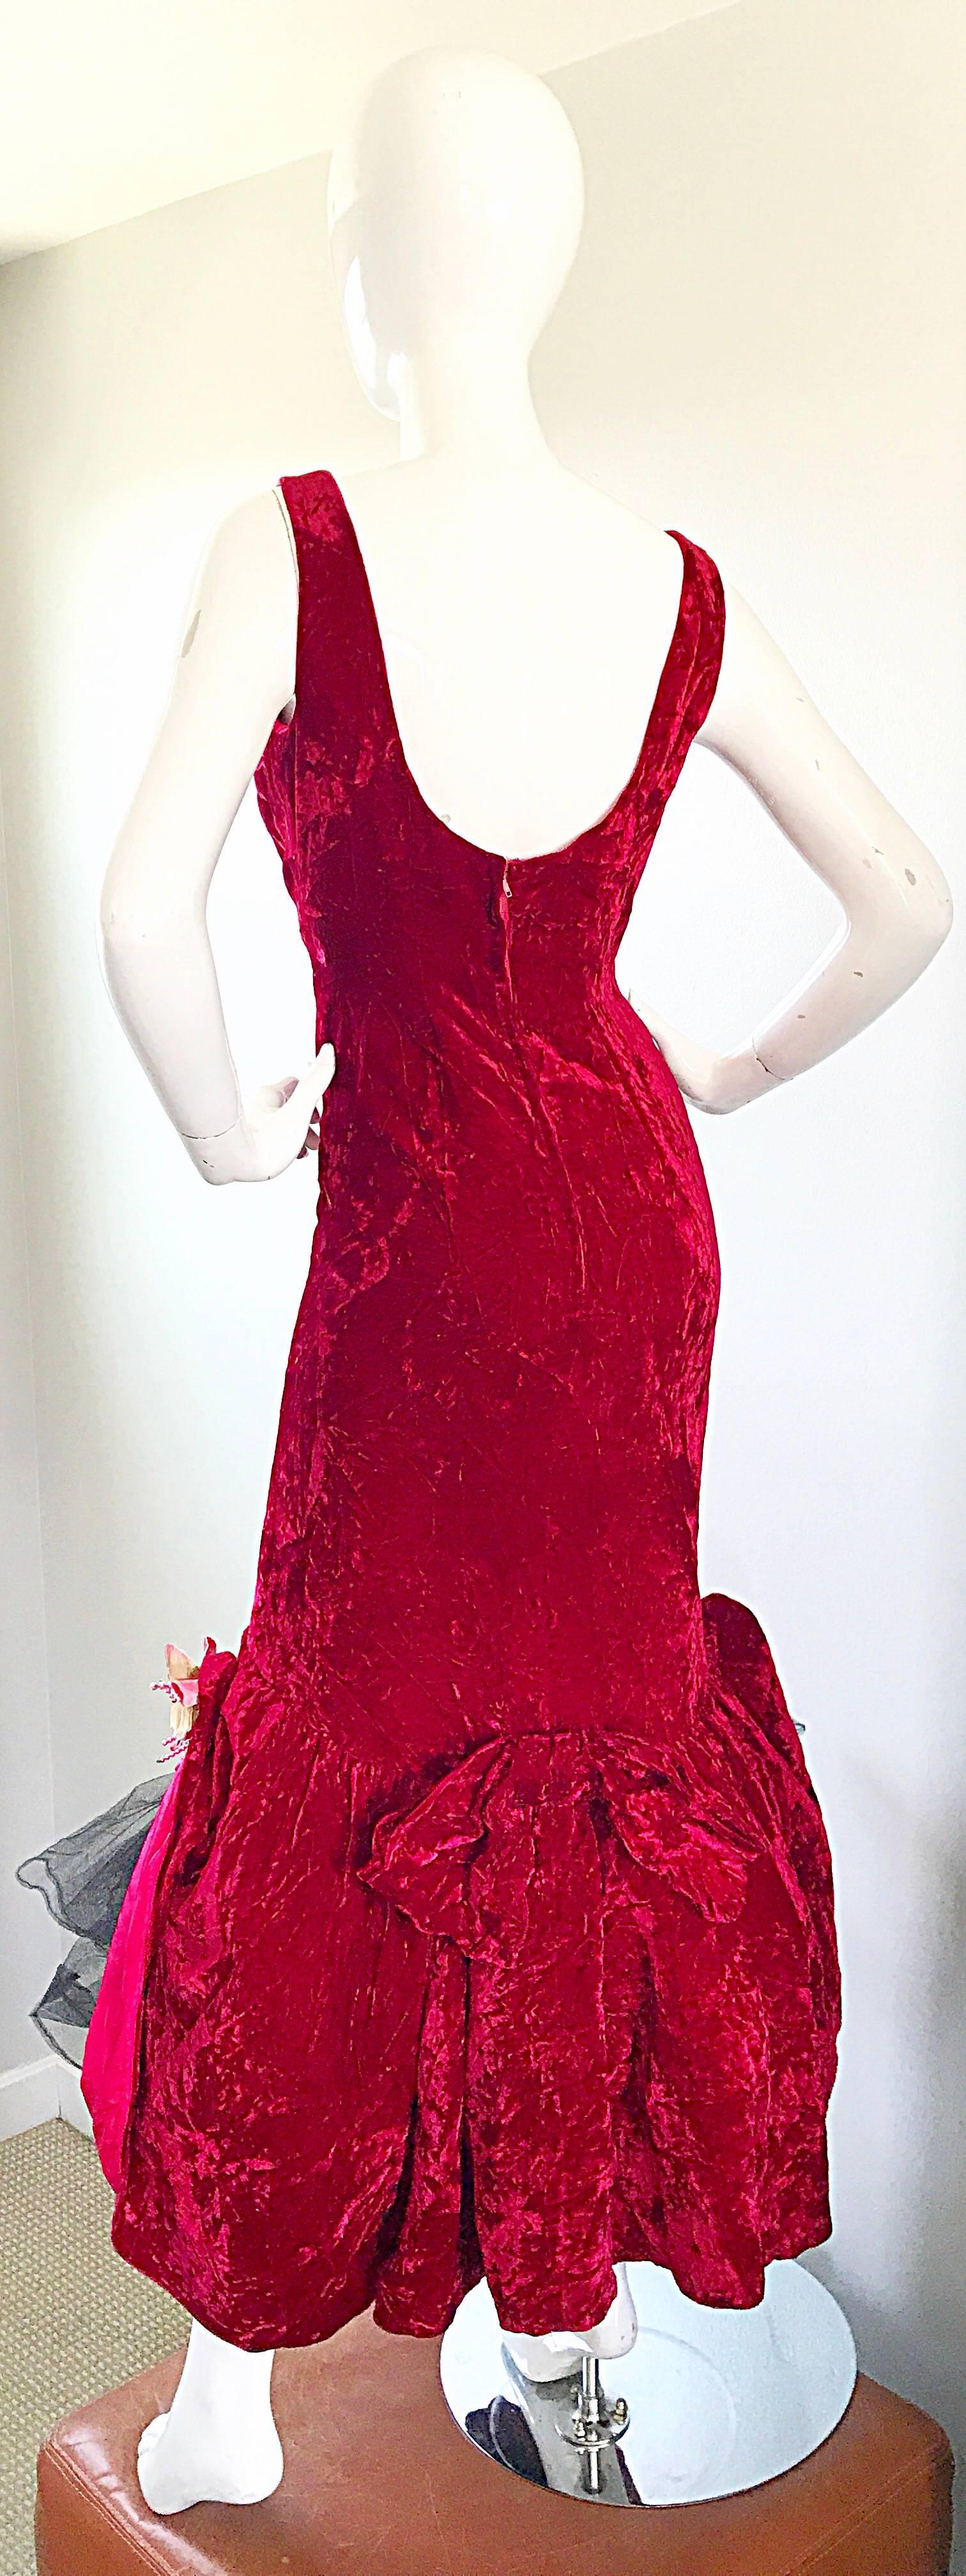 Sensational 1950s Demi Couture Crimson Red Crushed Velvet Vintage Mermaid Gown For Sale 2